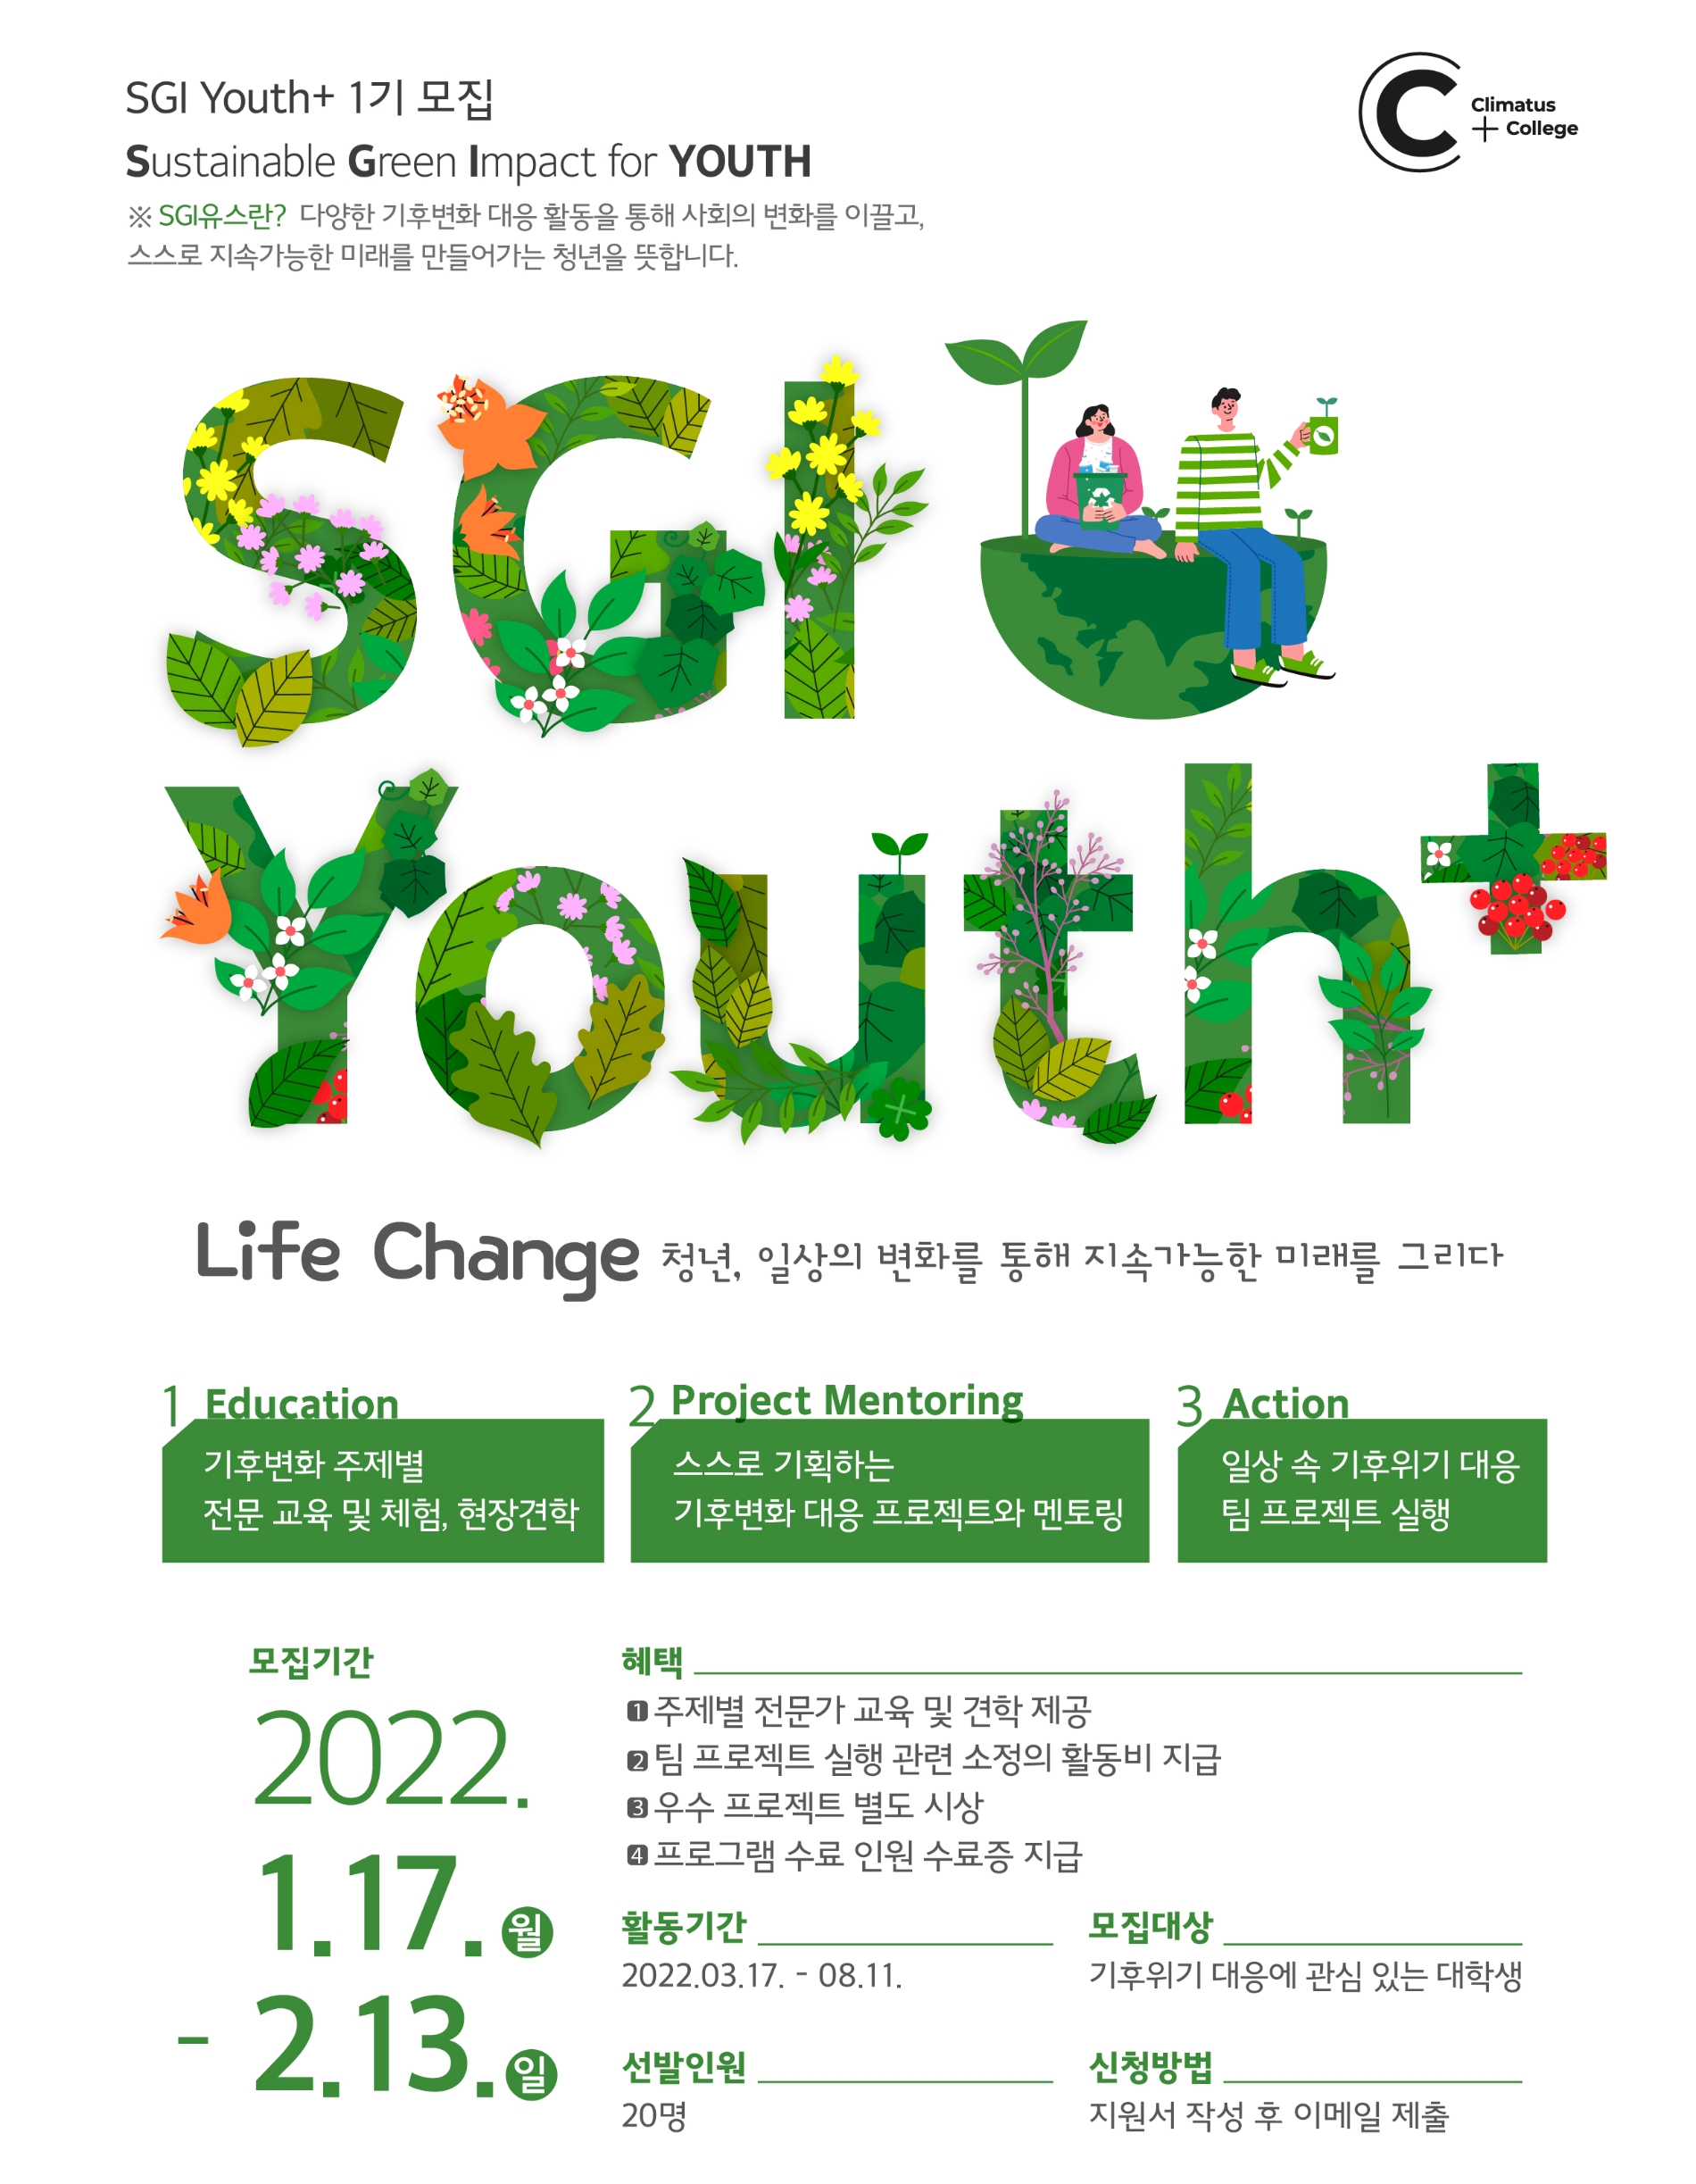 SGI서울보증과 기후변화센터가 ‘SGI Youth+ 1기’를 모집한다./사진 제공= 기후변화센터